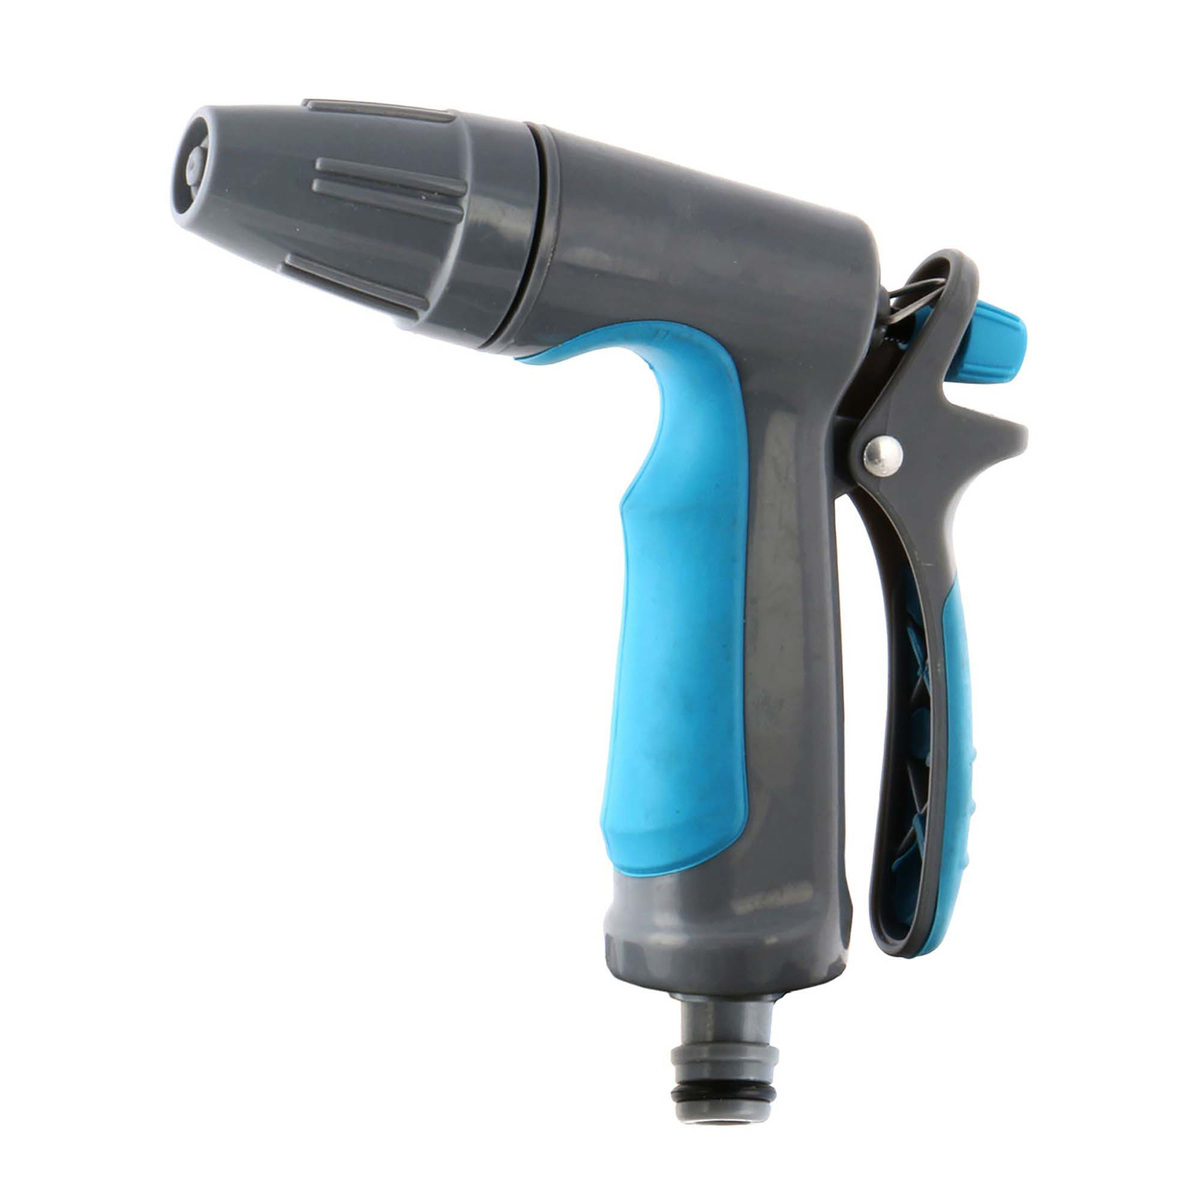 Aqua Craft Pistol Sprinkler, 2 Functions, Blue/Grey, 21004